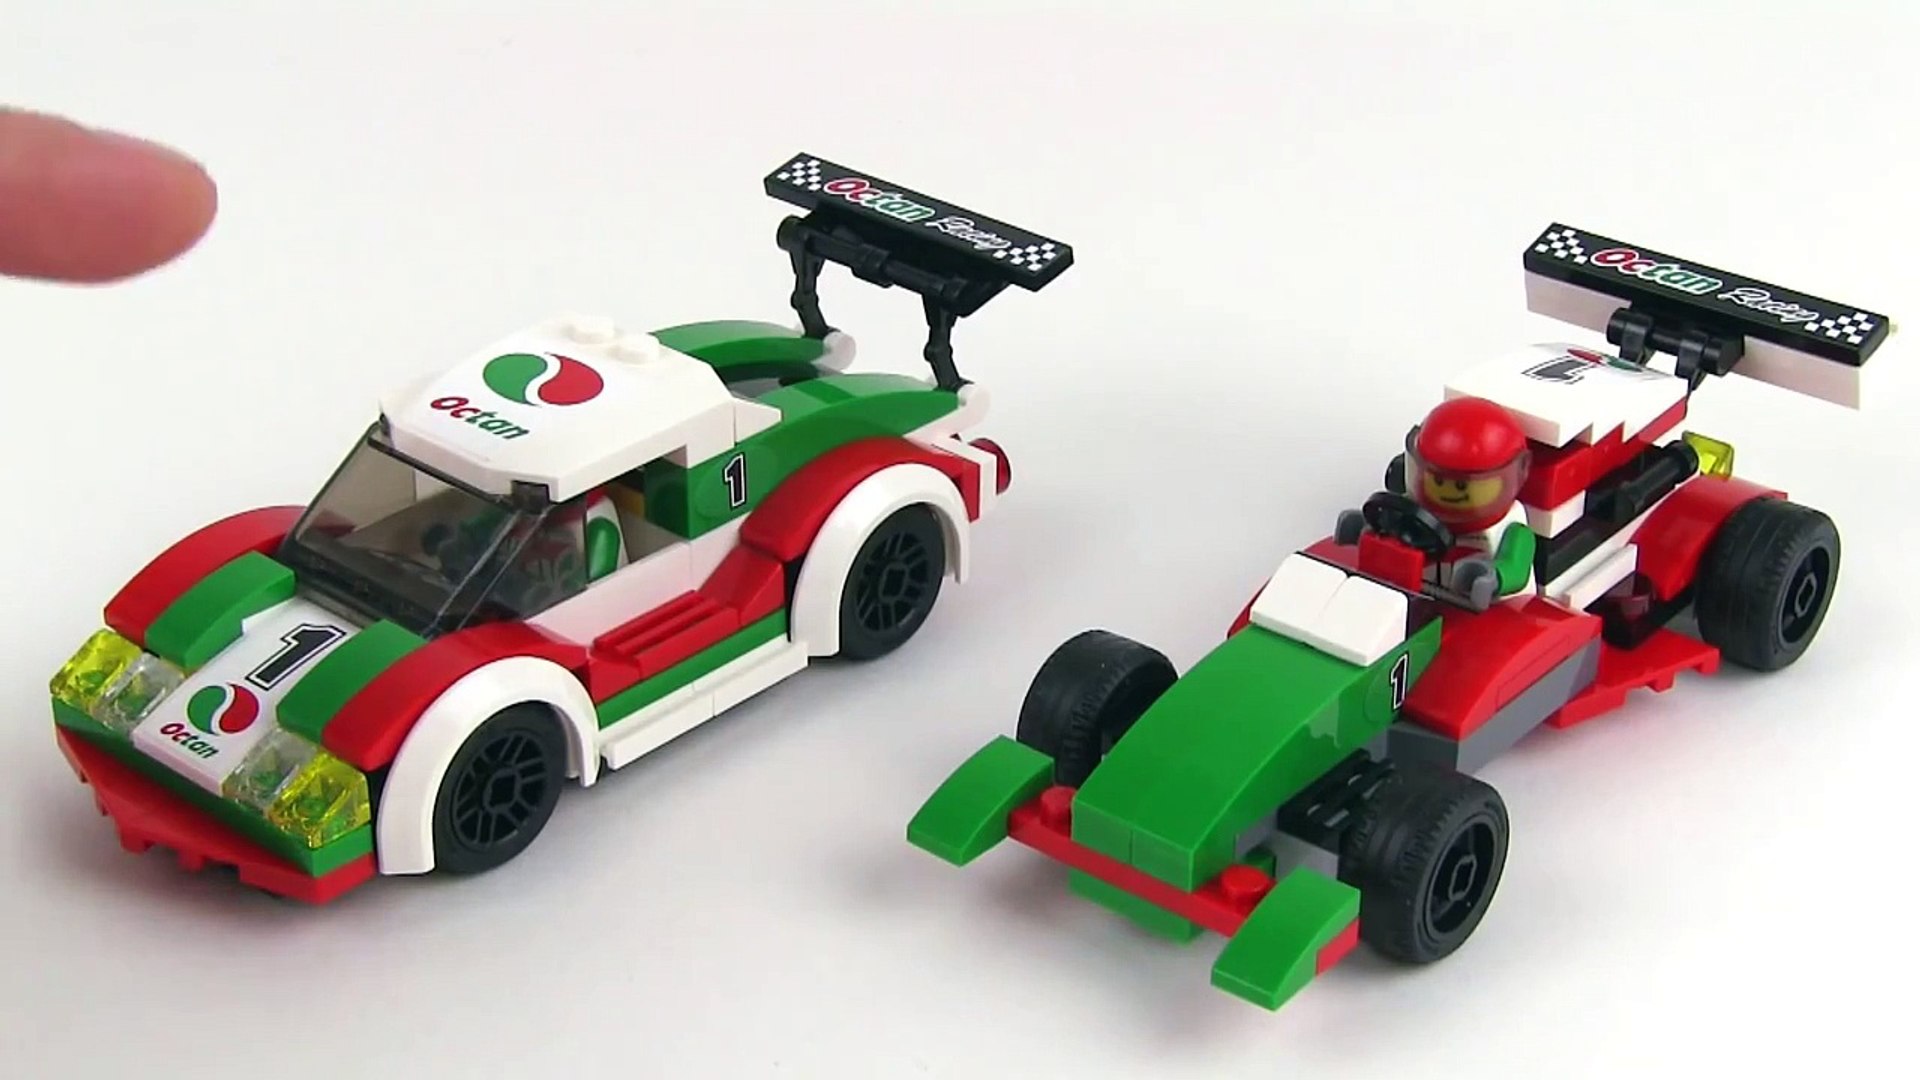 LEGO 60053 Race Car alternate build MOC - JANGBRiCKS Remix! - video  Dailymotion